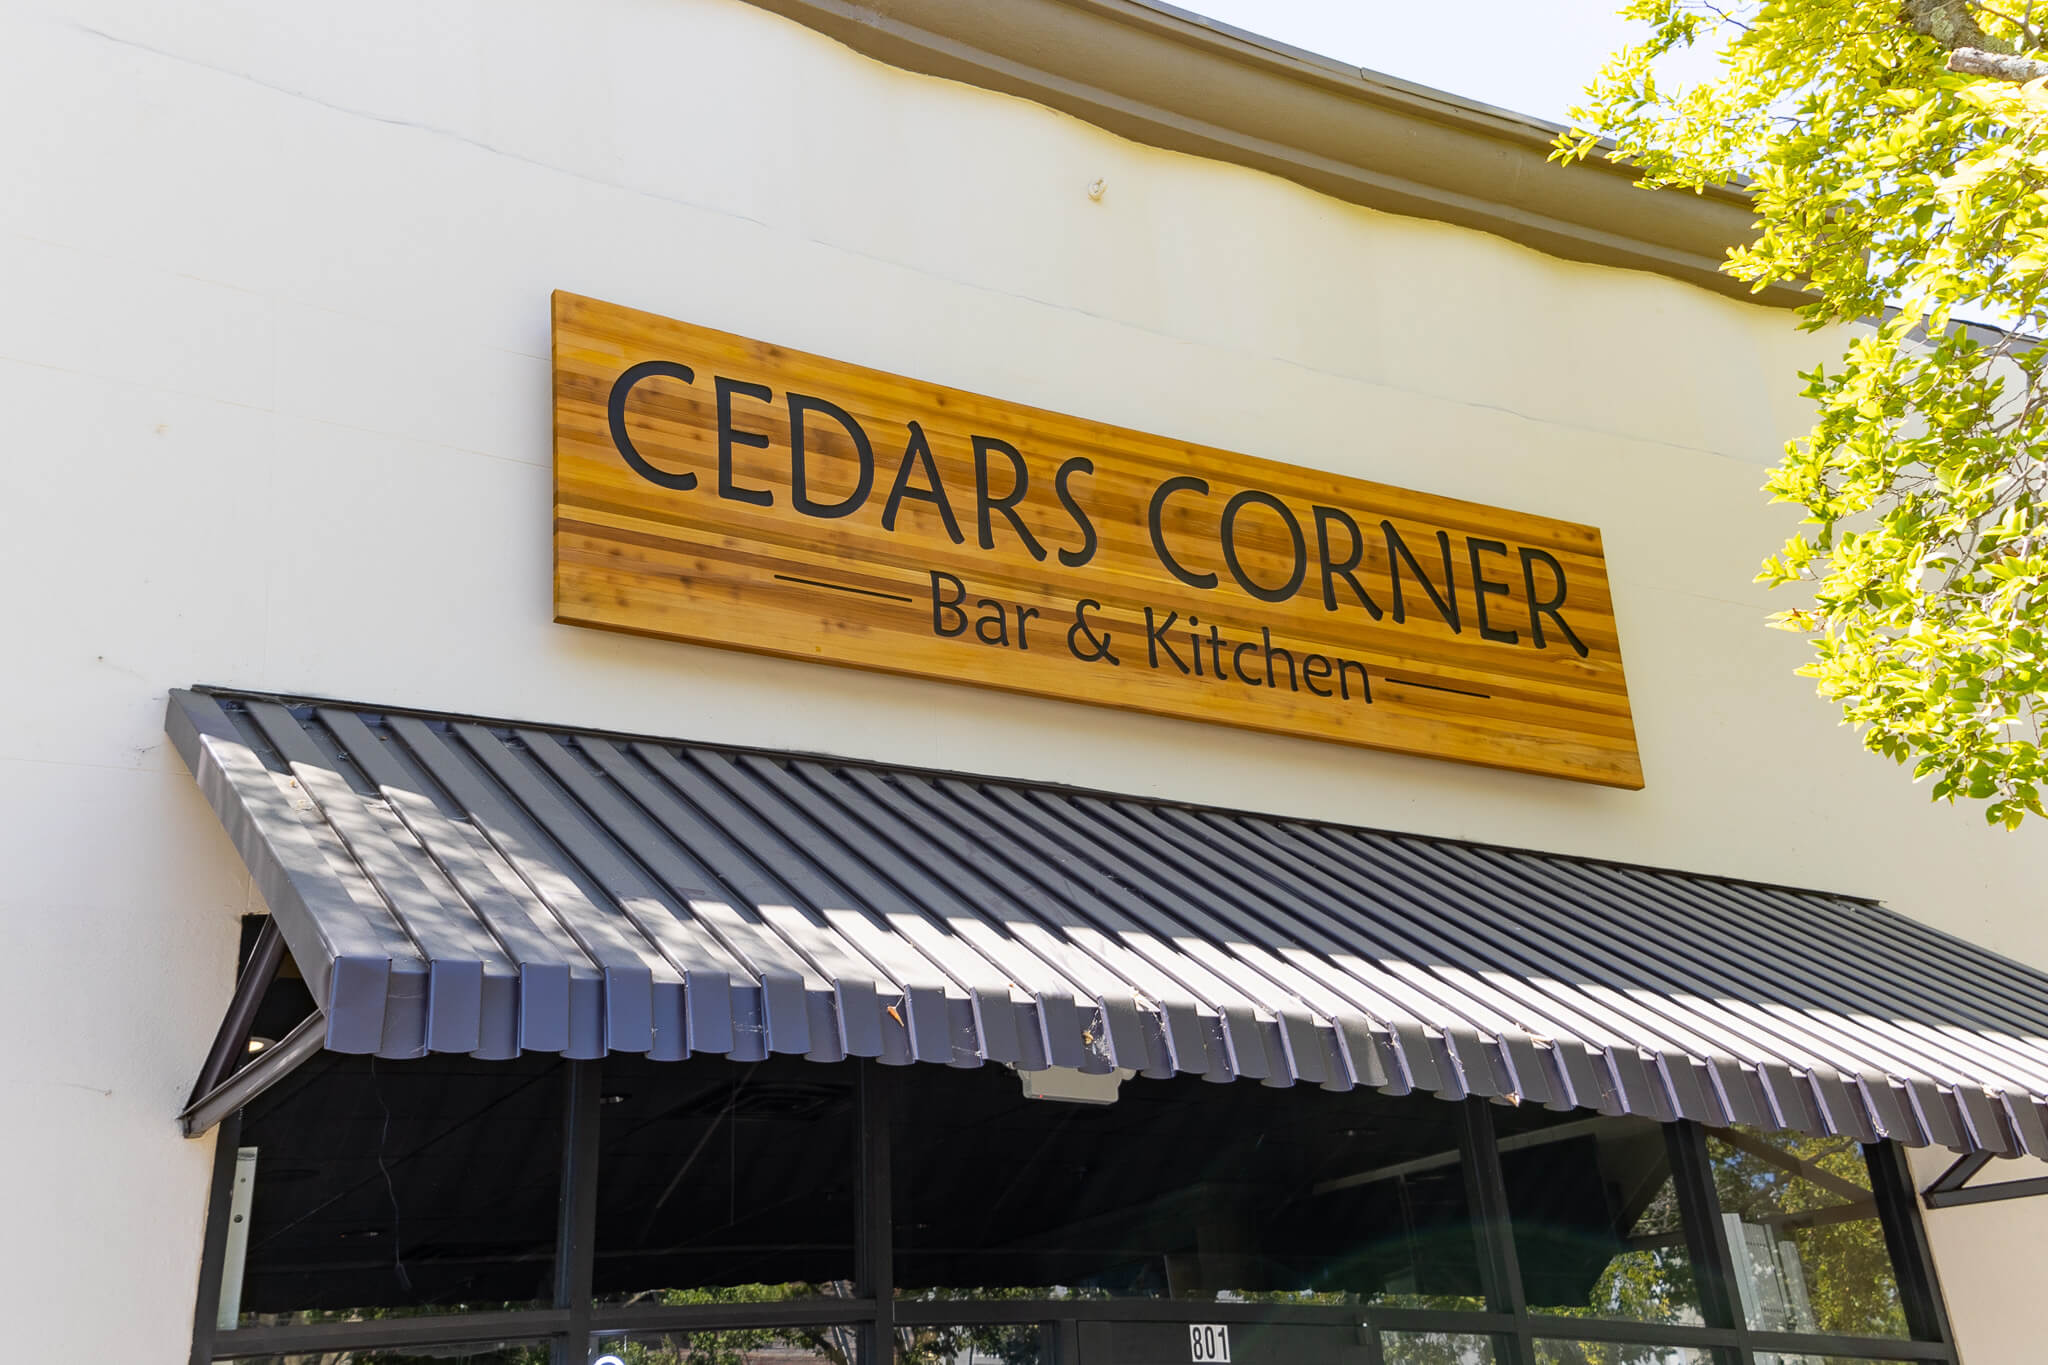 Cedars Corner Bar and Kitchen